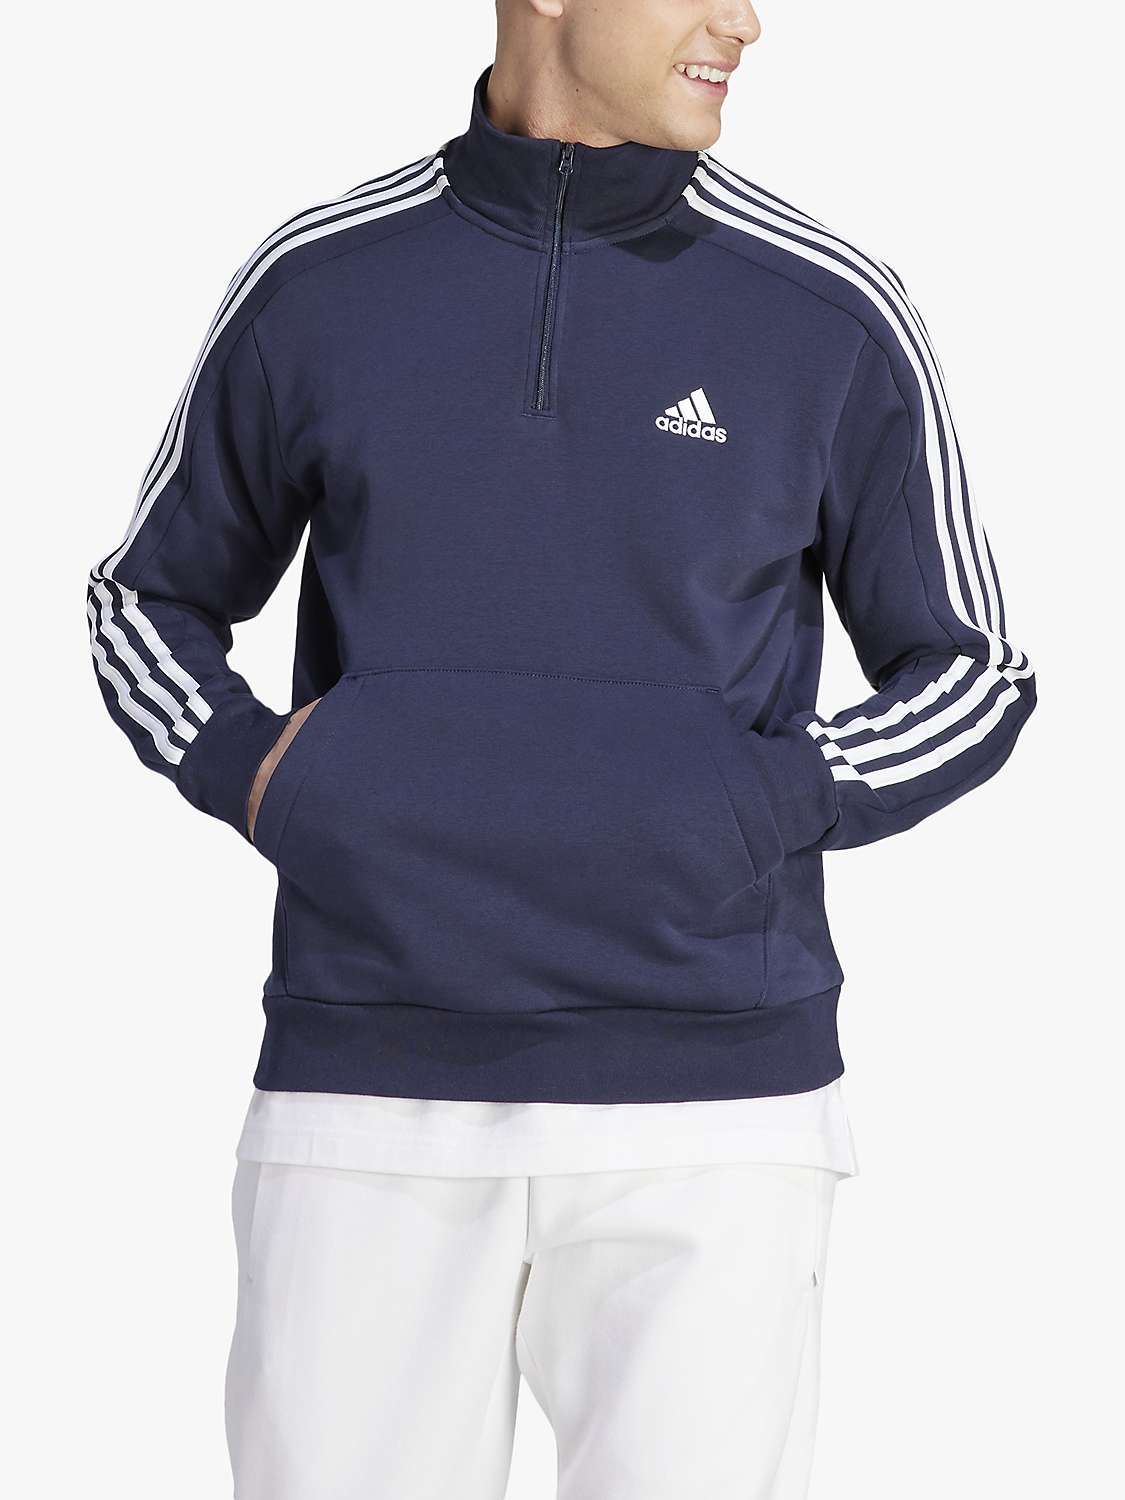 Buy adidas 3-Stripes Fleece 1/4 Zip Sweatshirt, Legend Ink/White Online at johnlewis.com